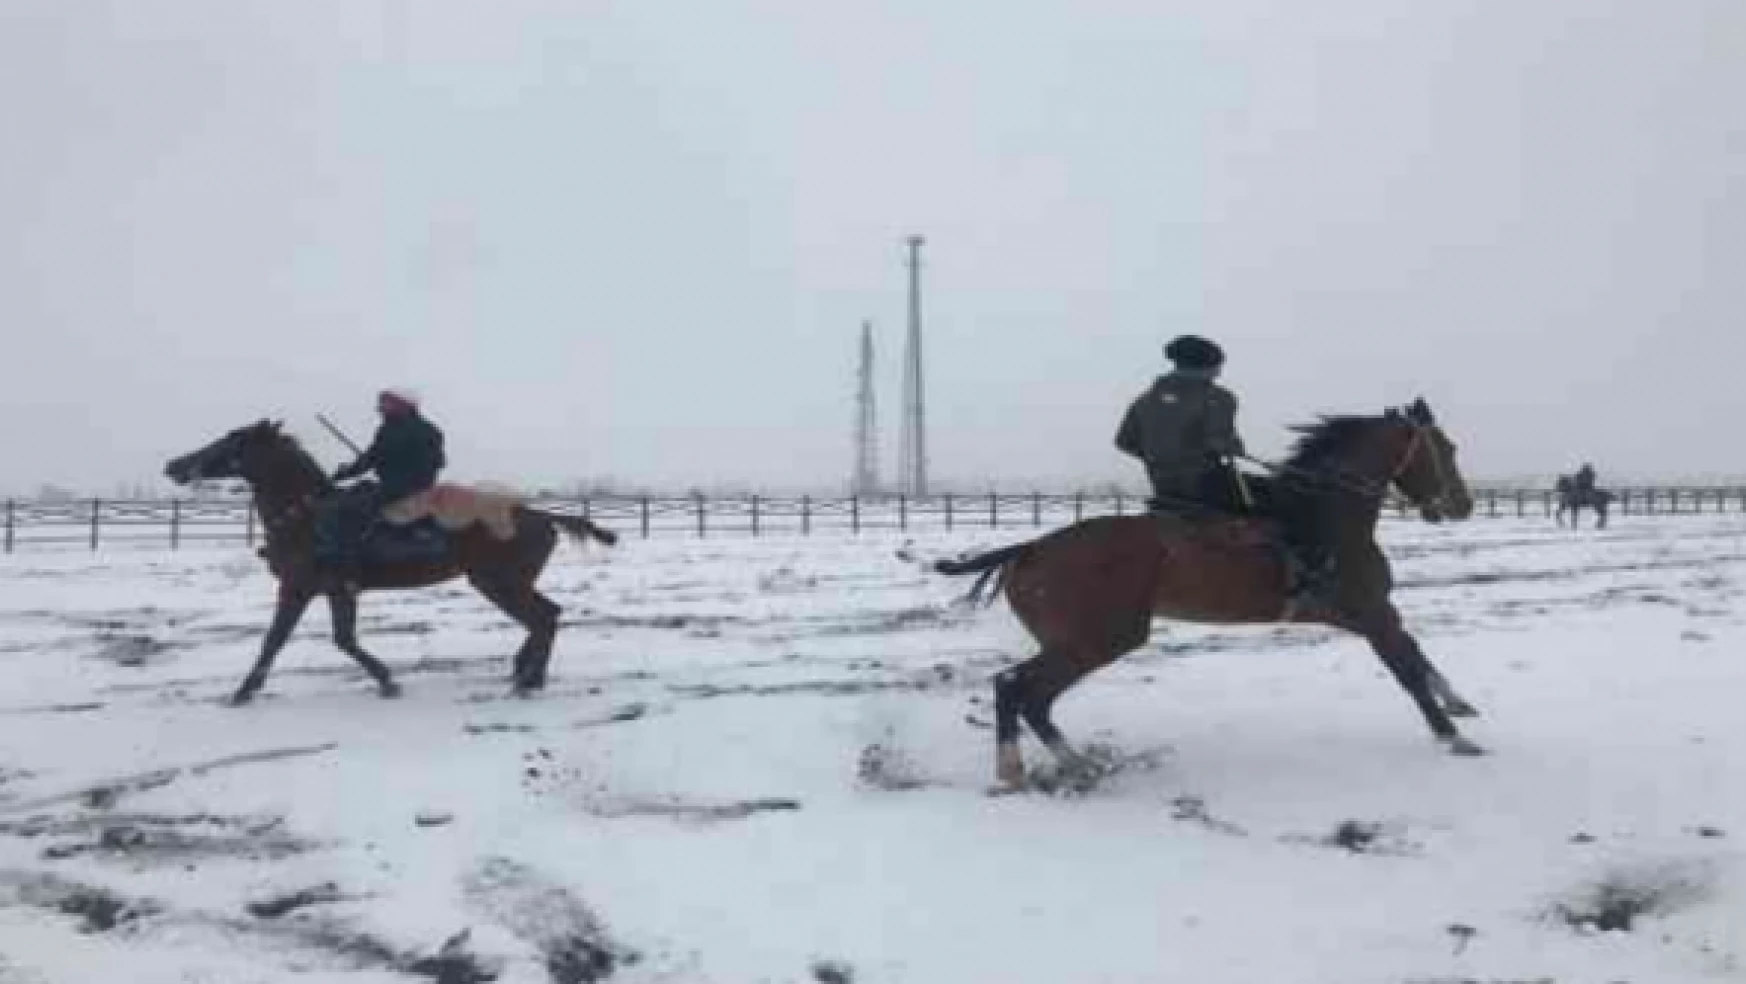 Kars'ta Rus rehberlere kar üstünde atlı cirit gösterisi sergilendi